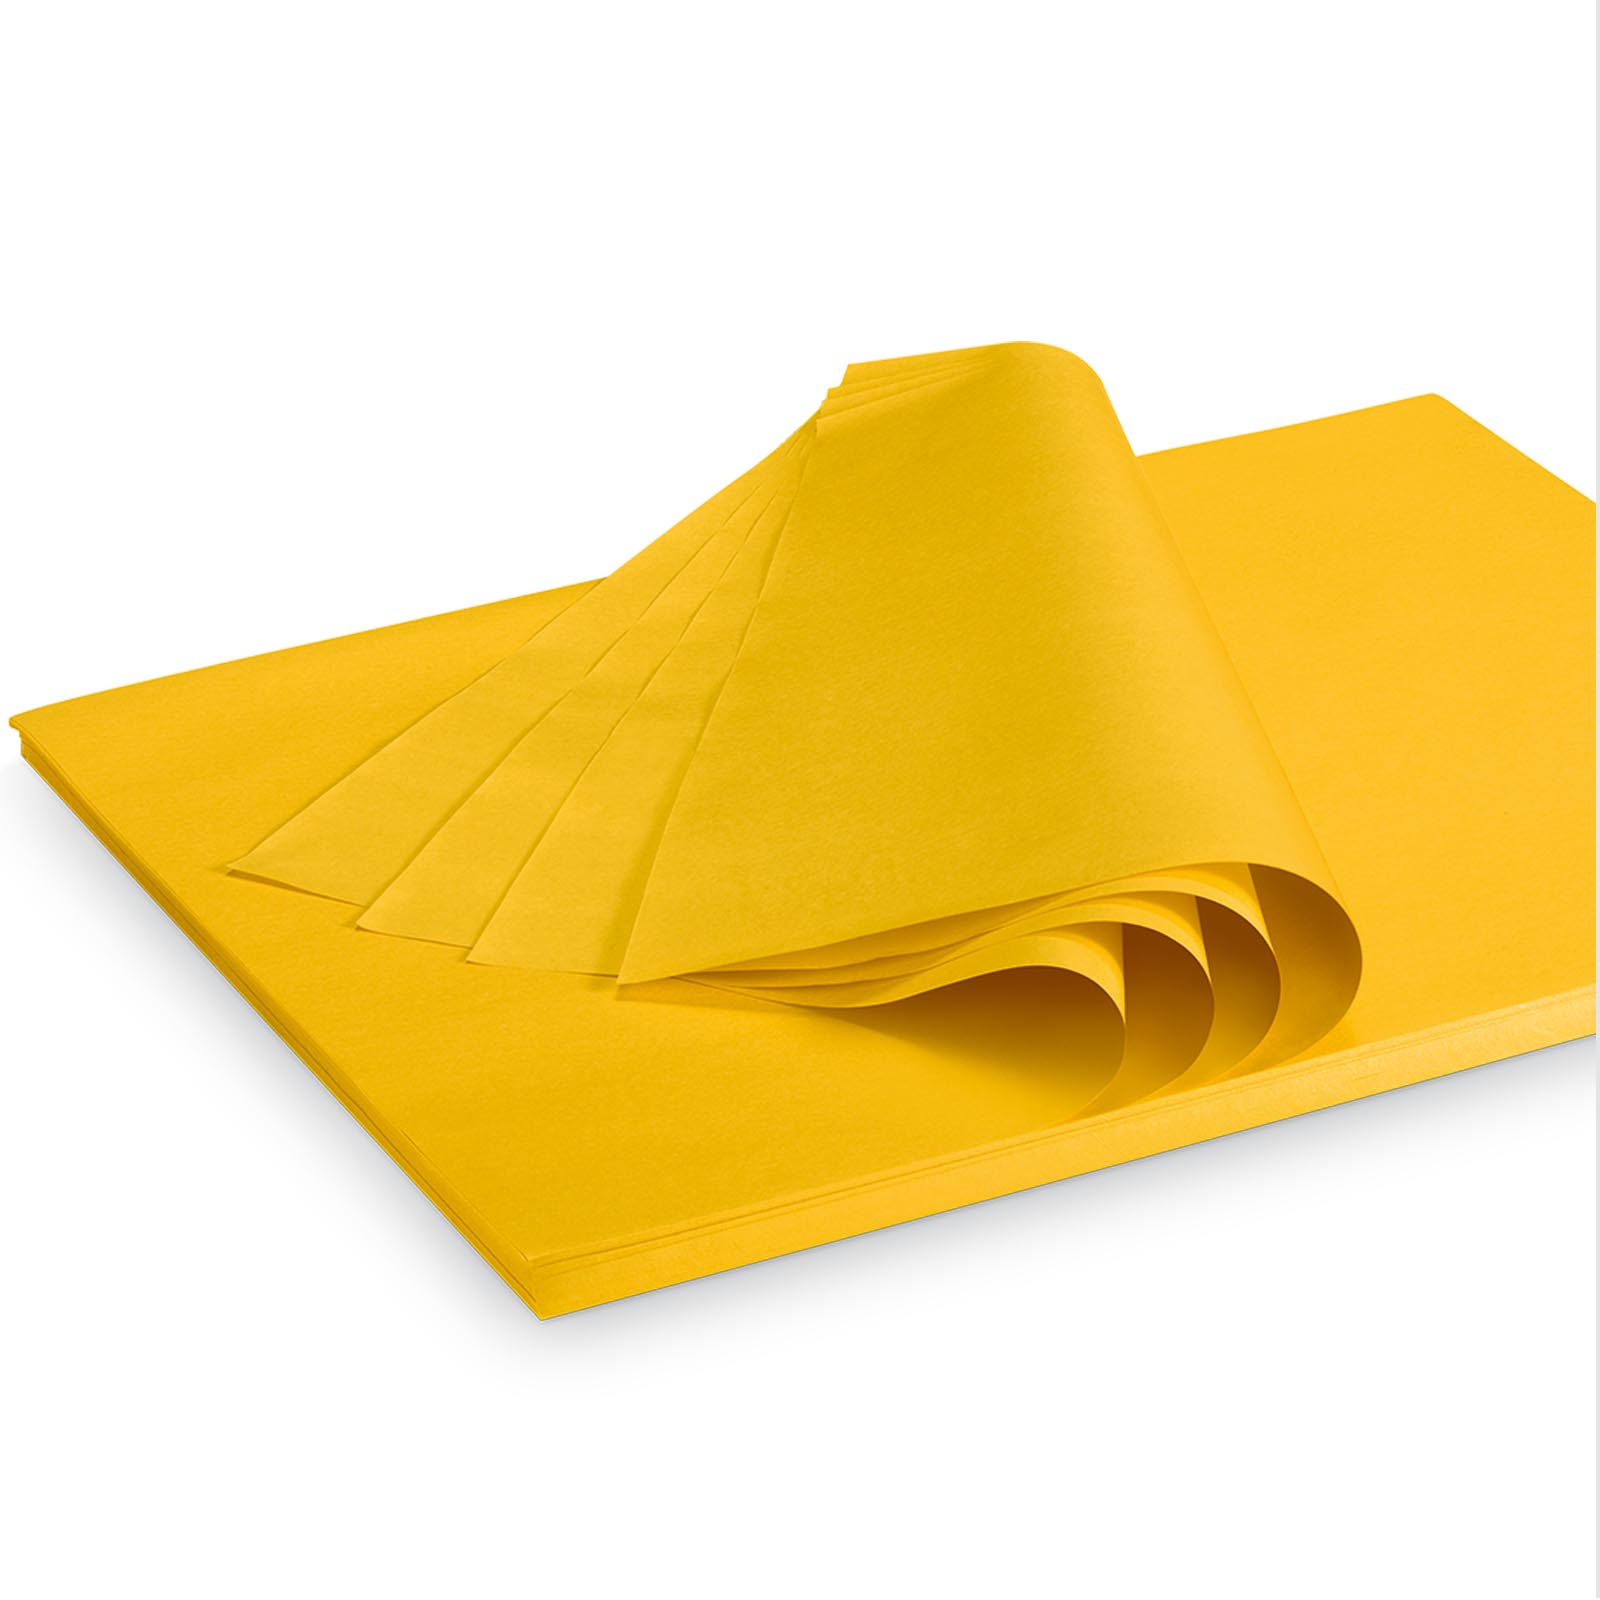 Seidenpapier gelb 375x500mm 35g/m²,300 Bogen/ Karton = 2kg